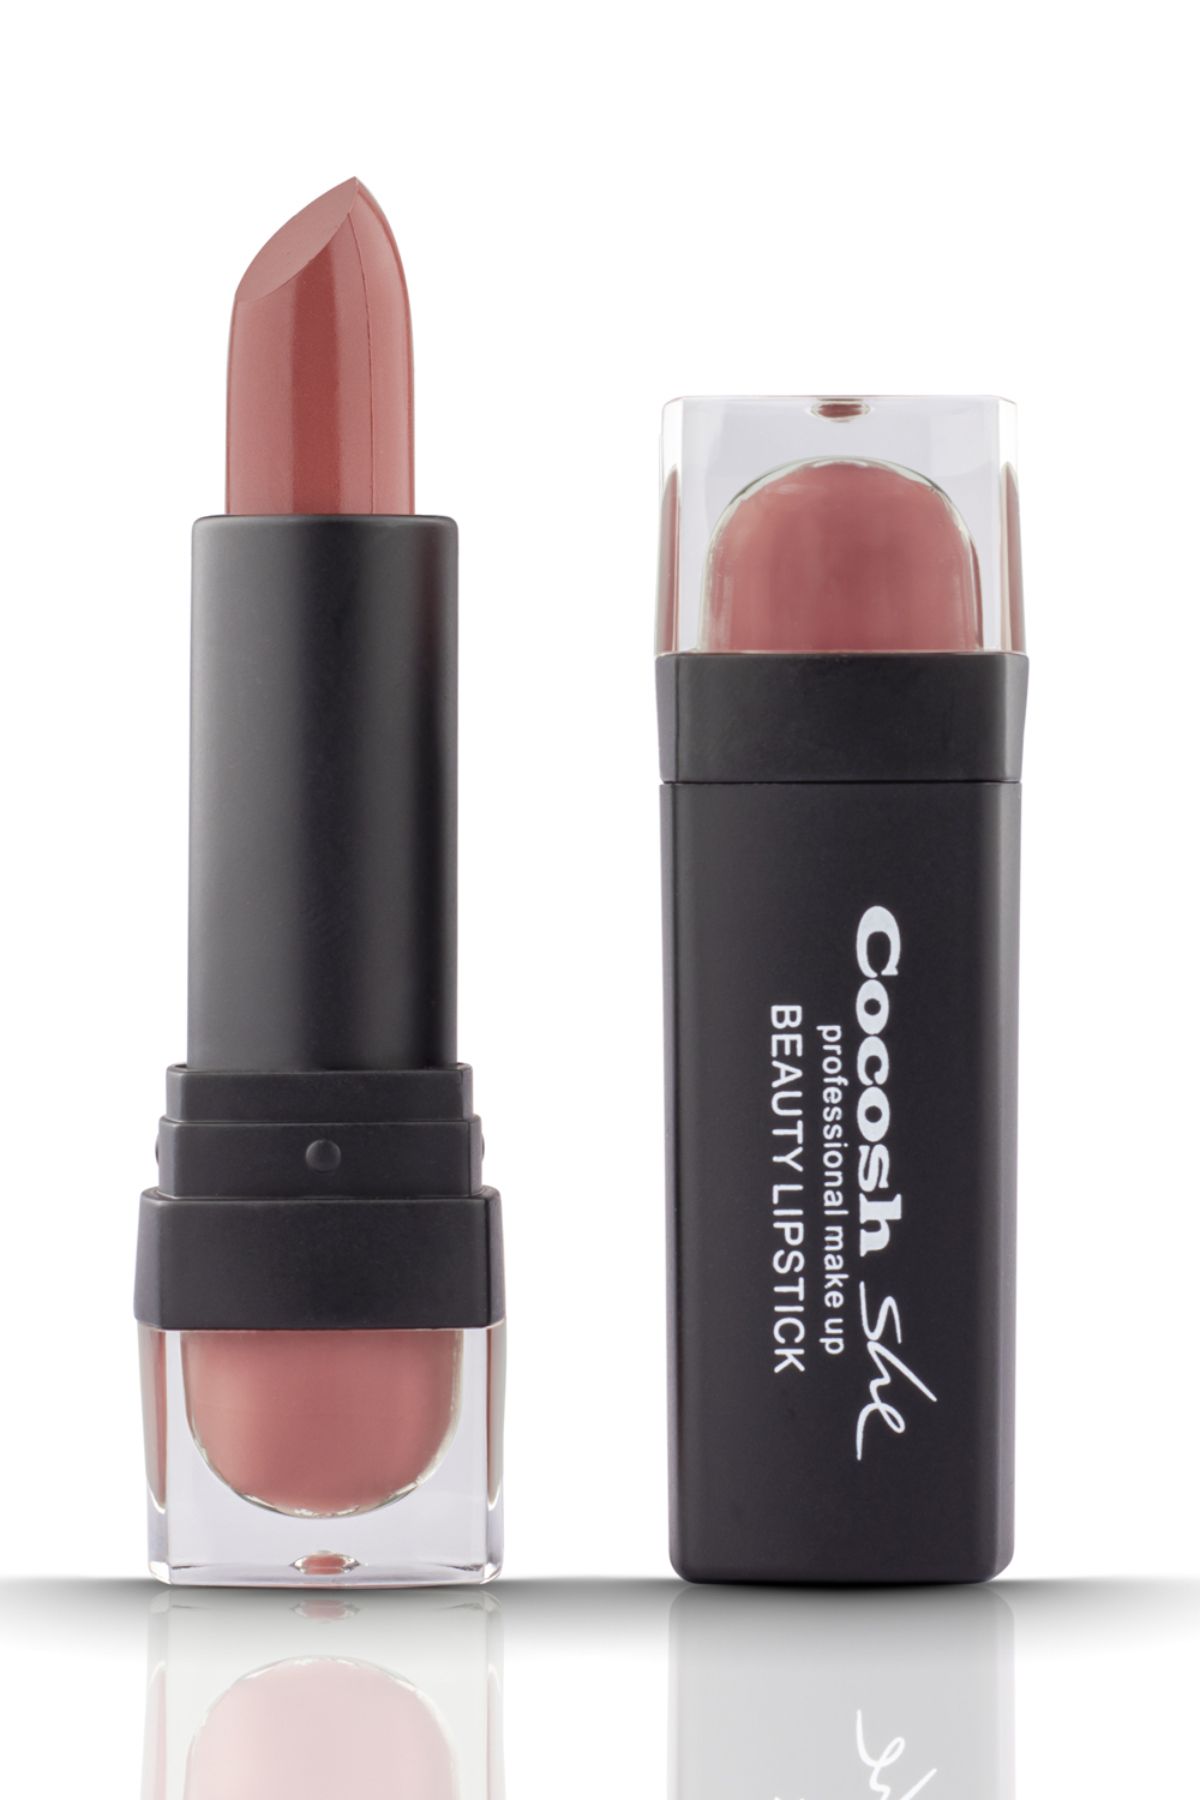 Cocosh She Beauty Lipstick Ruj 08 Rouge, Kremsi Formül, Saten Görünüm, Orta-Tam Kapatıcılık